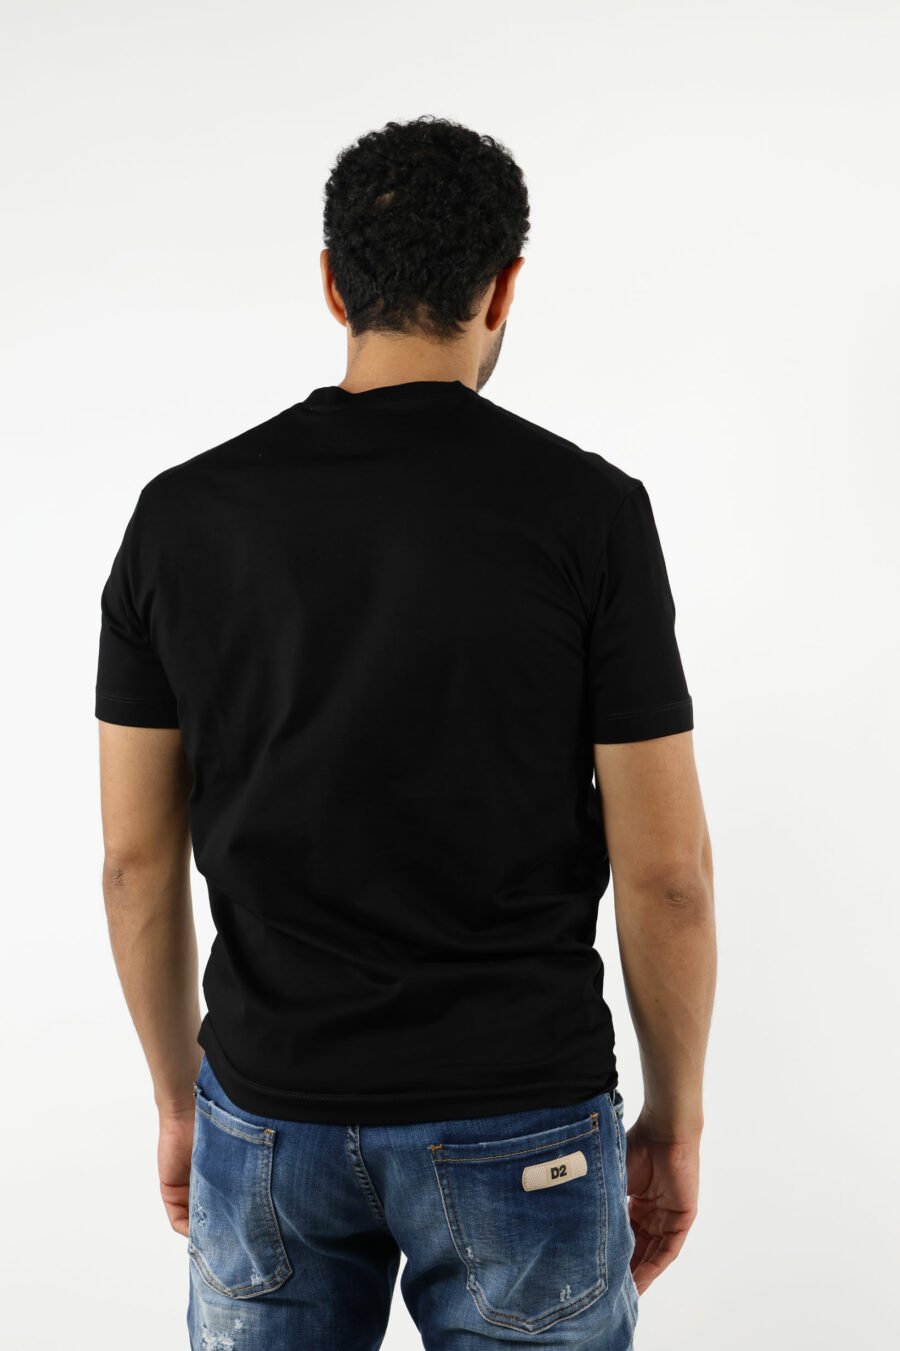 T-shirt preta com maxilogo retro multicolorido - 111203